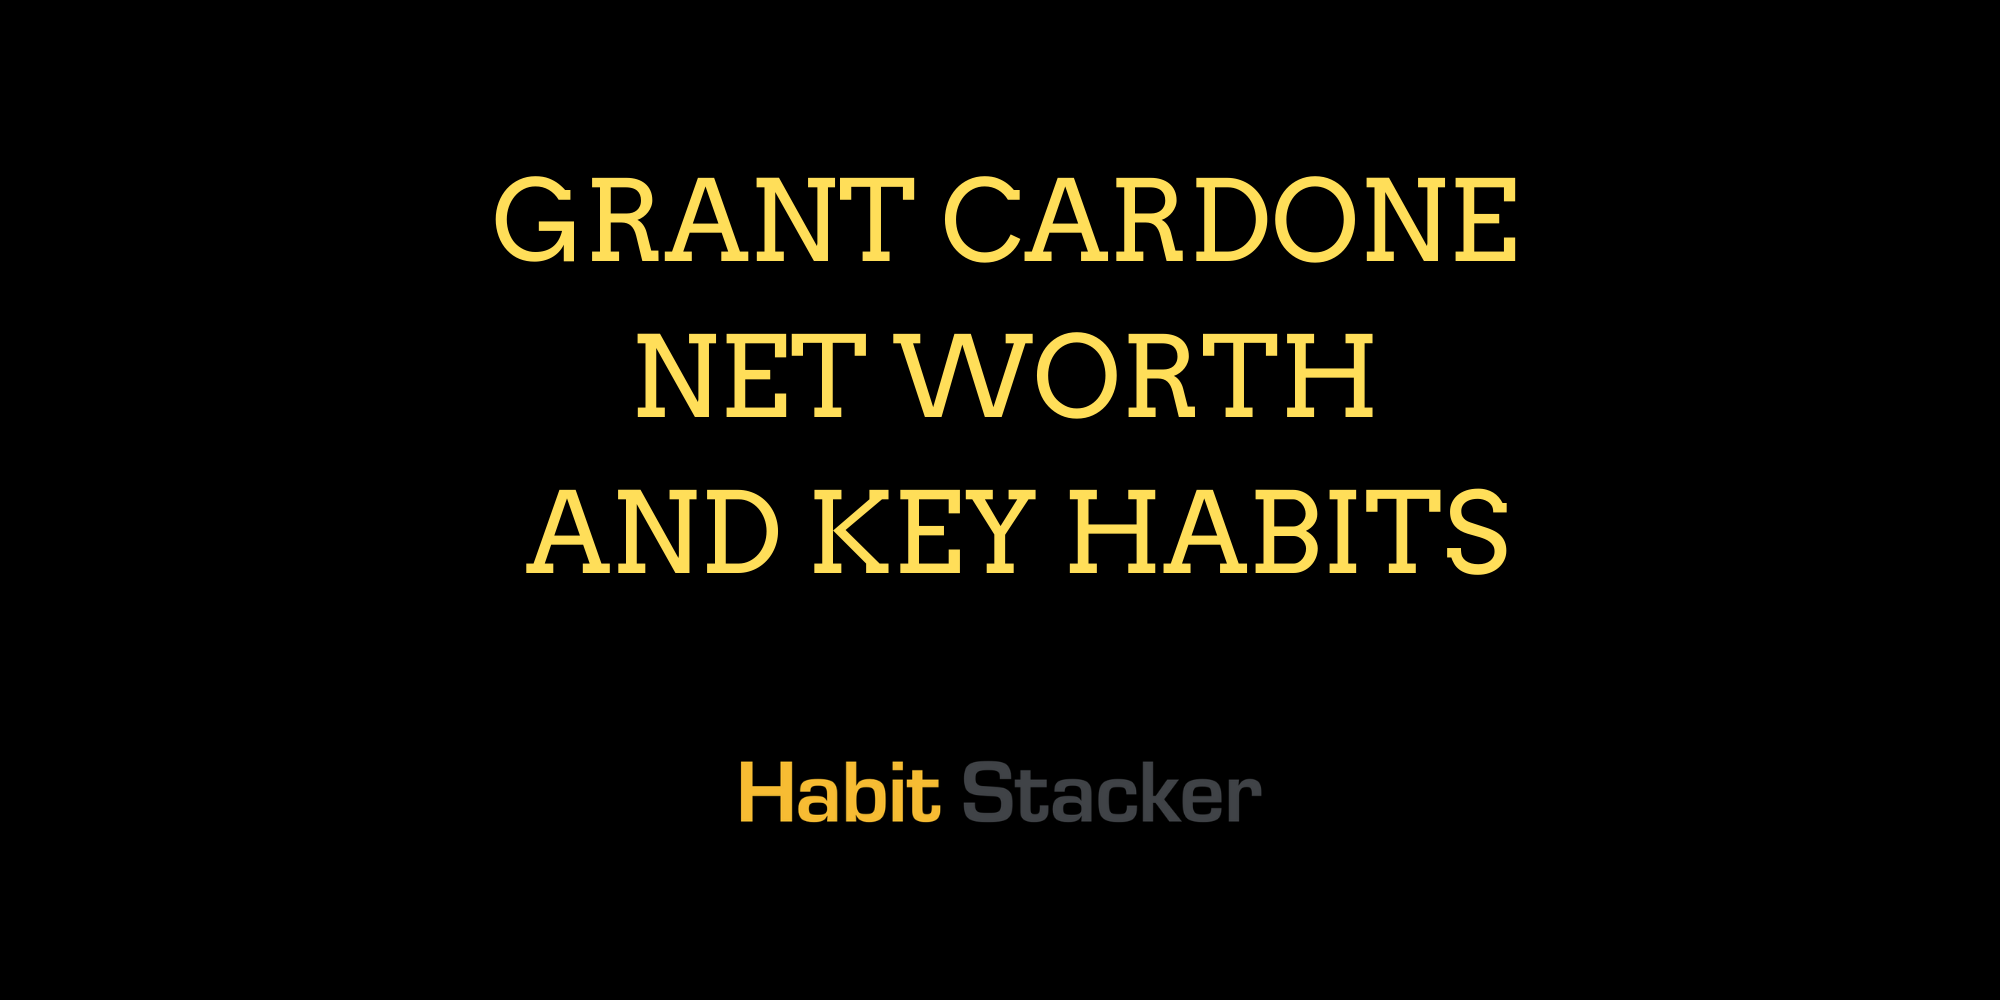 Grant Cardone Net Worth and Key Habits